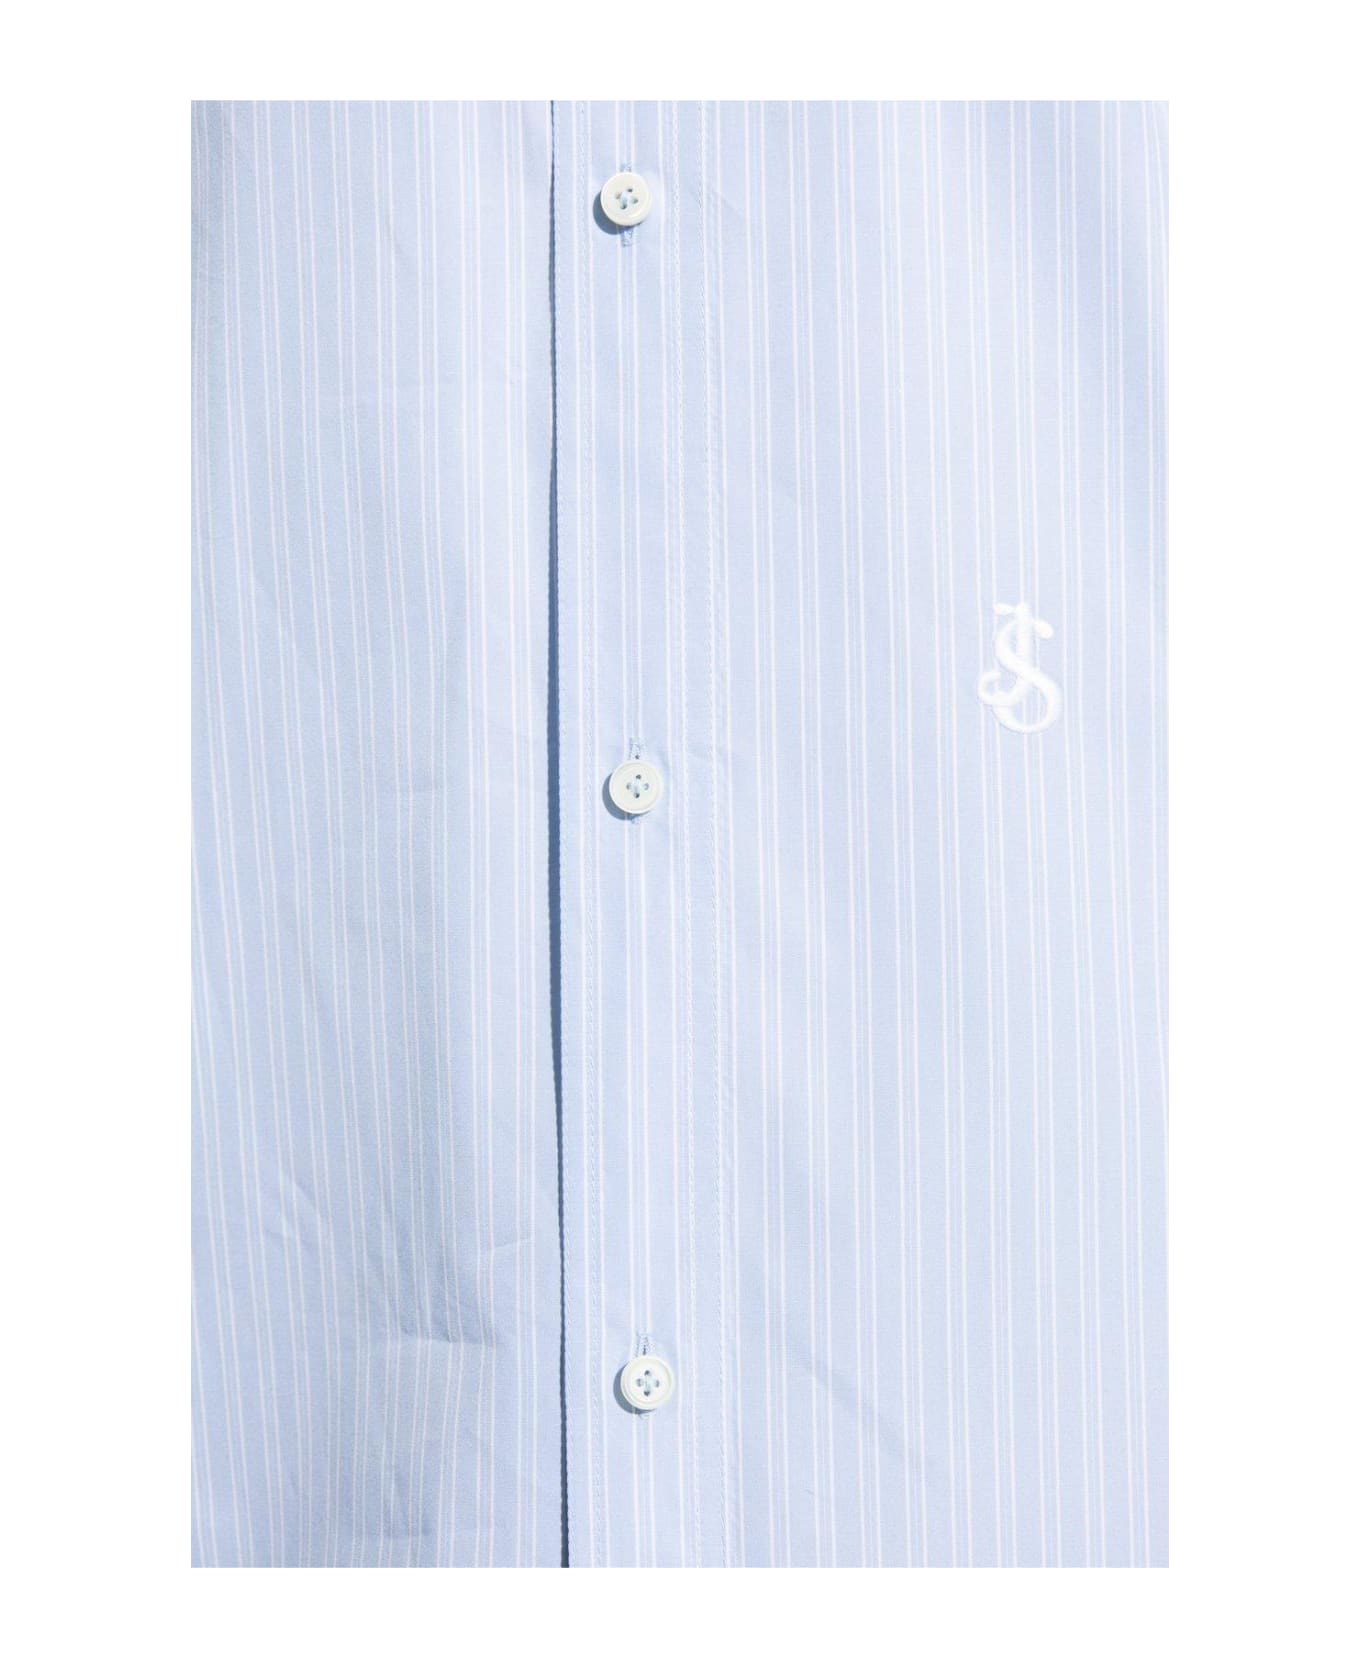 Jil Sander Logo Embroidered Striped Shirt シャツ